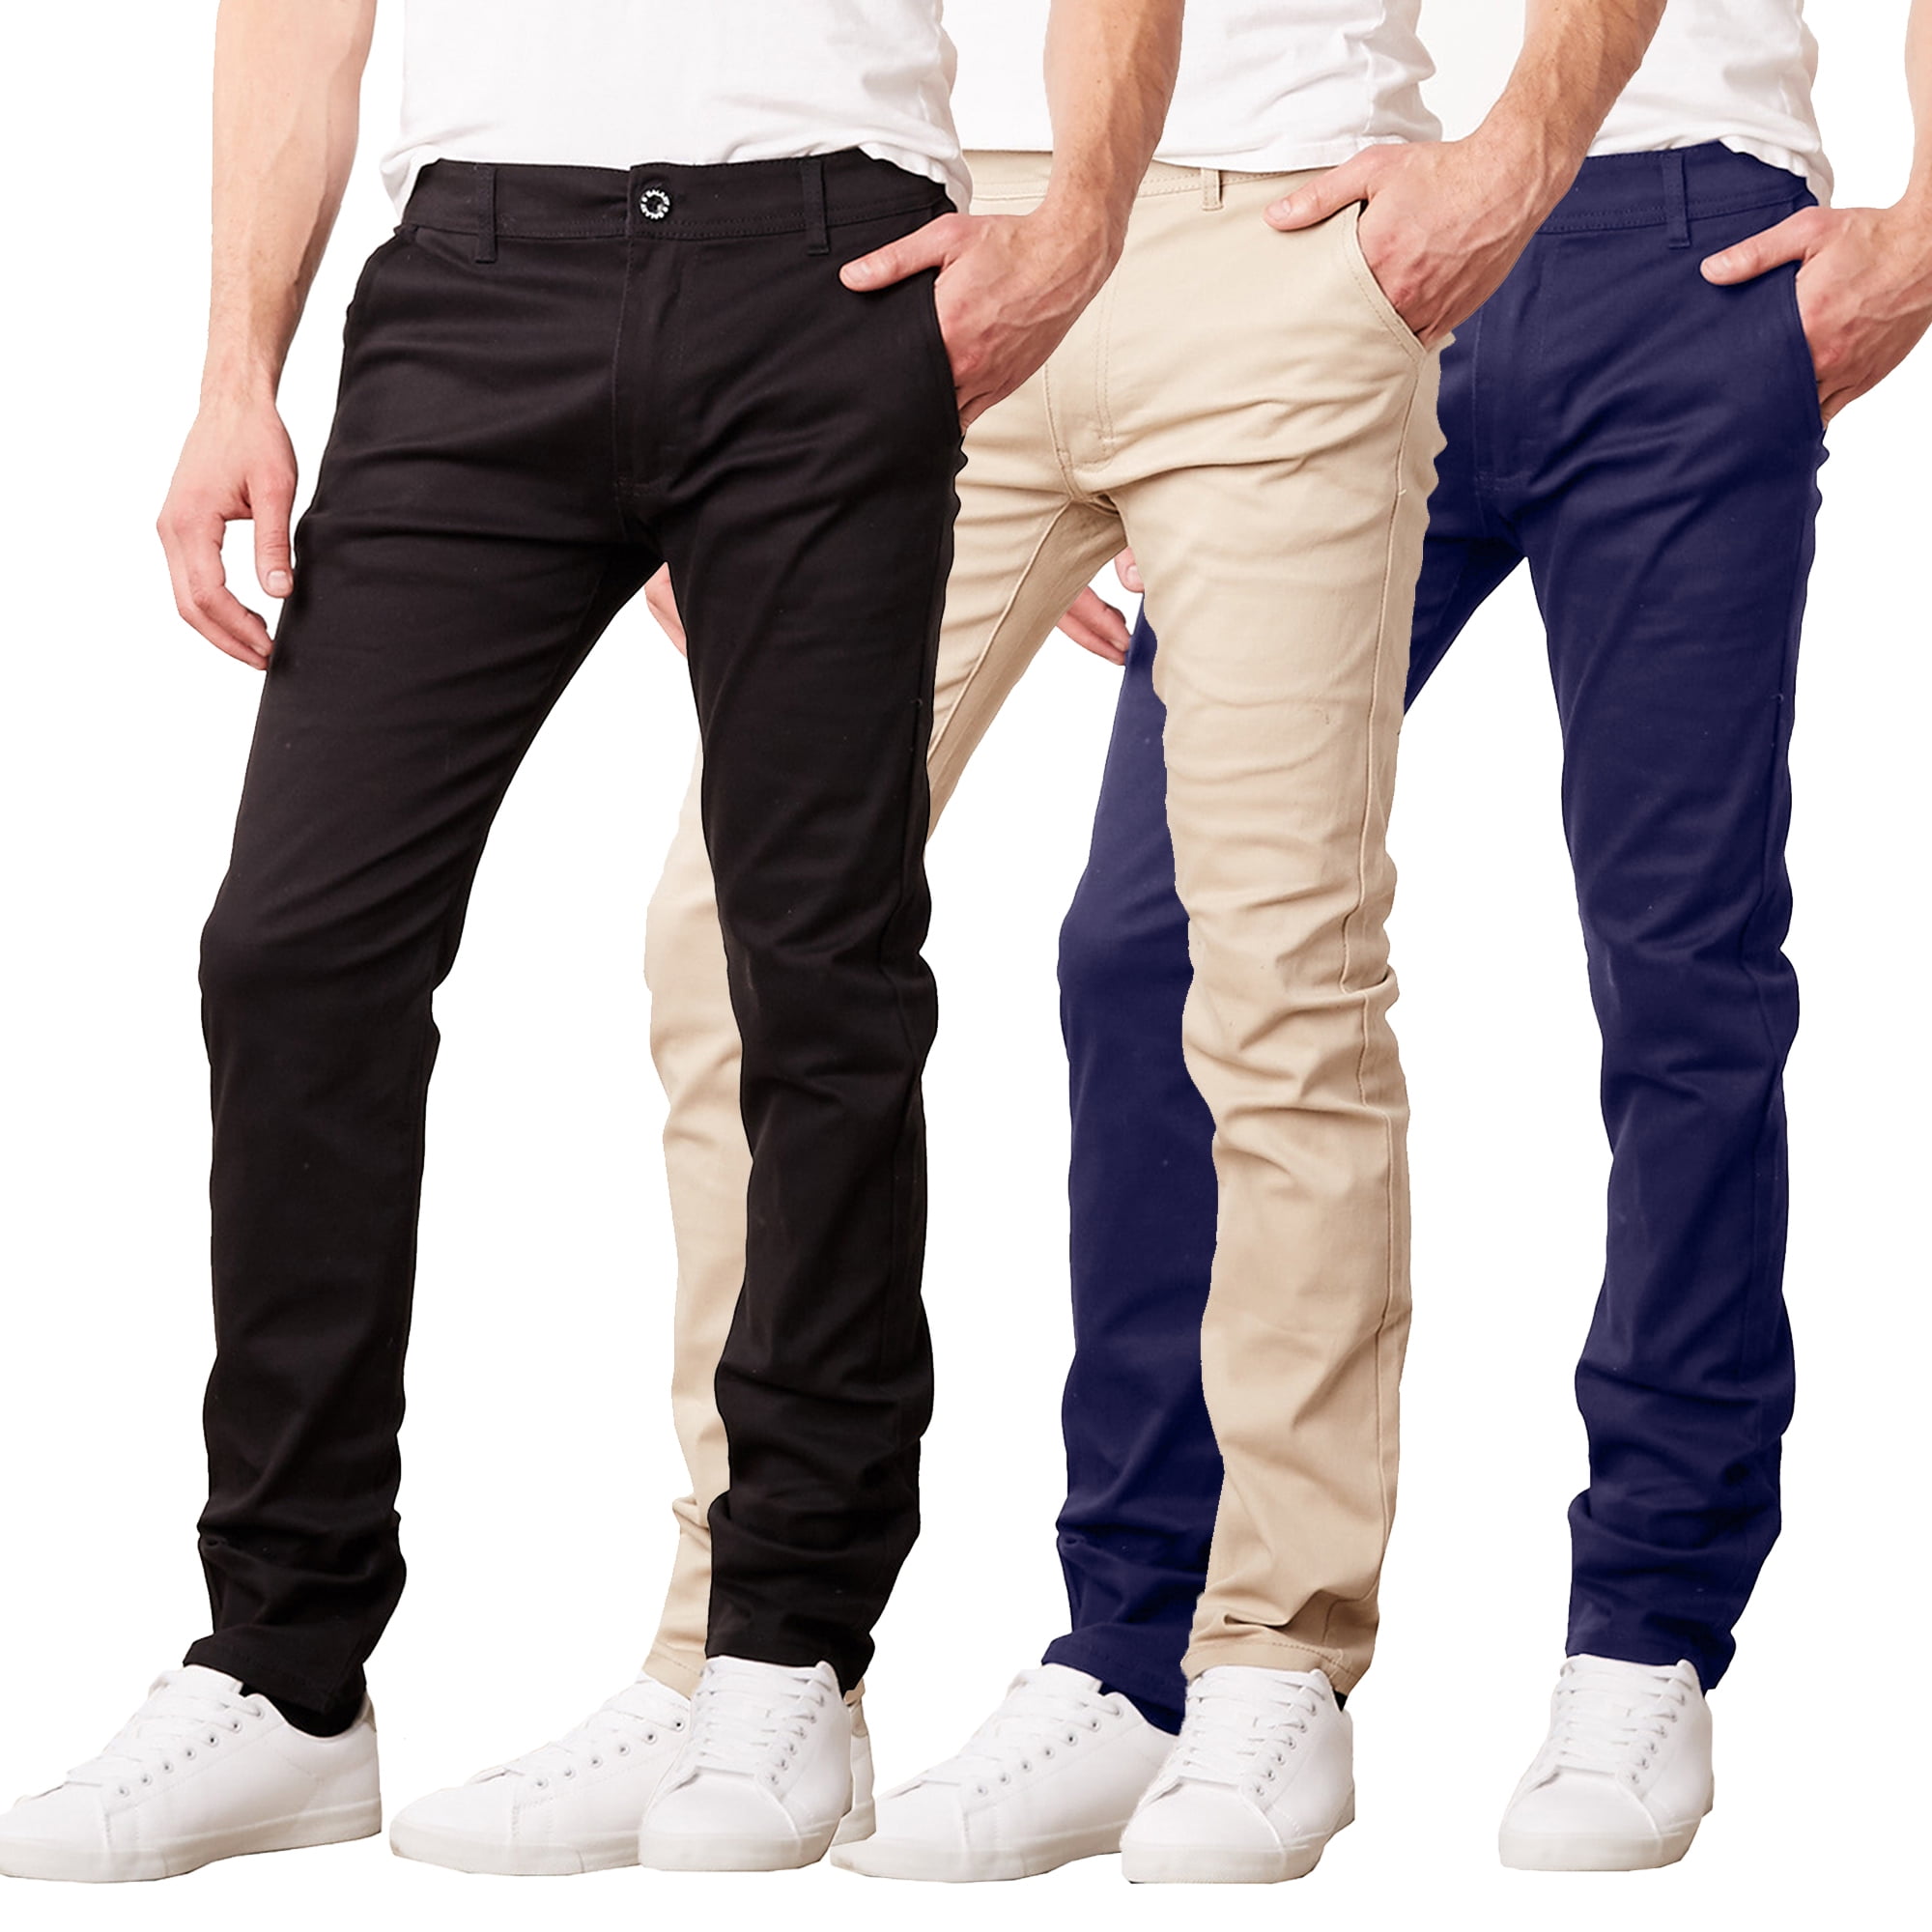 OLD NAVY Rockstar Super Skinny High Rise Khaki Pants - Size 6 | eBay